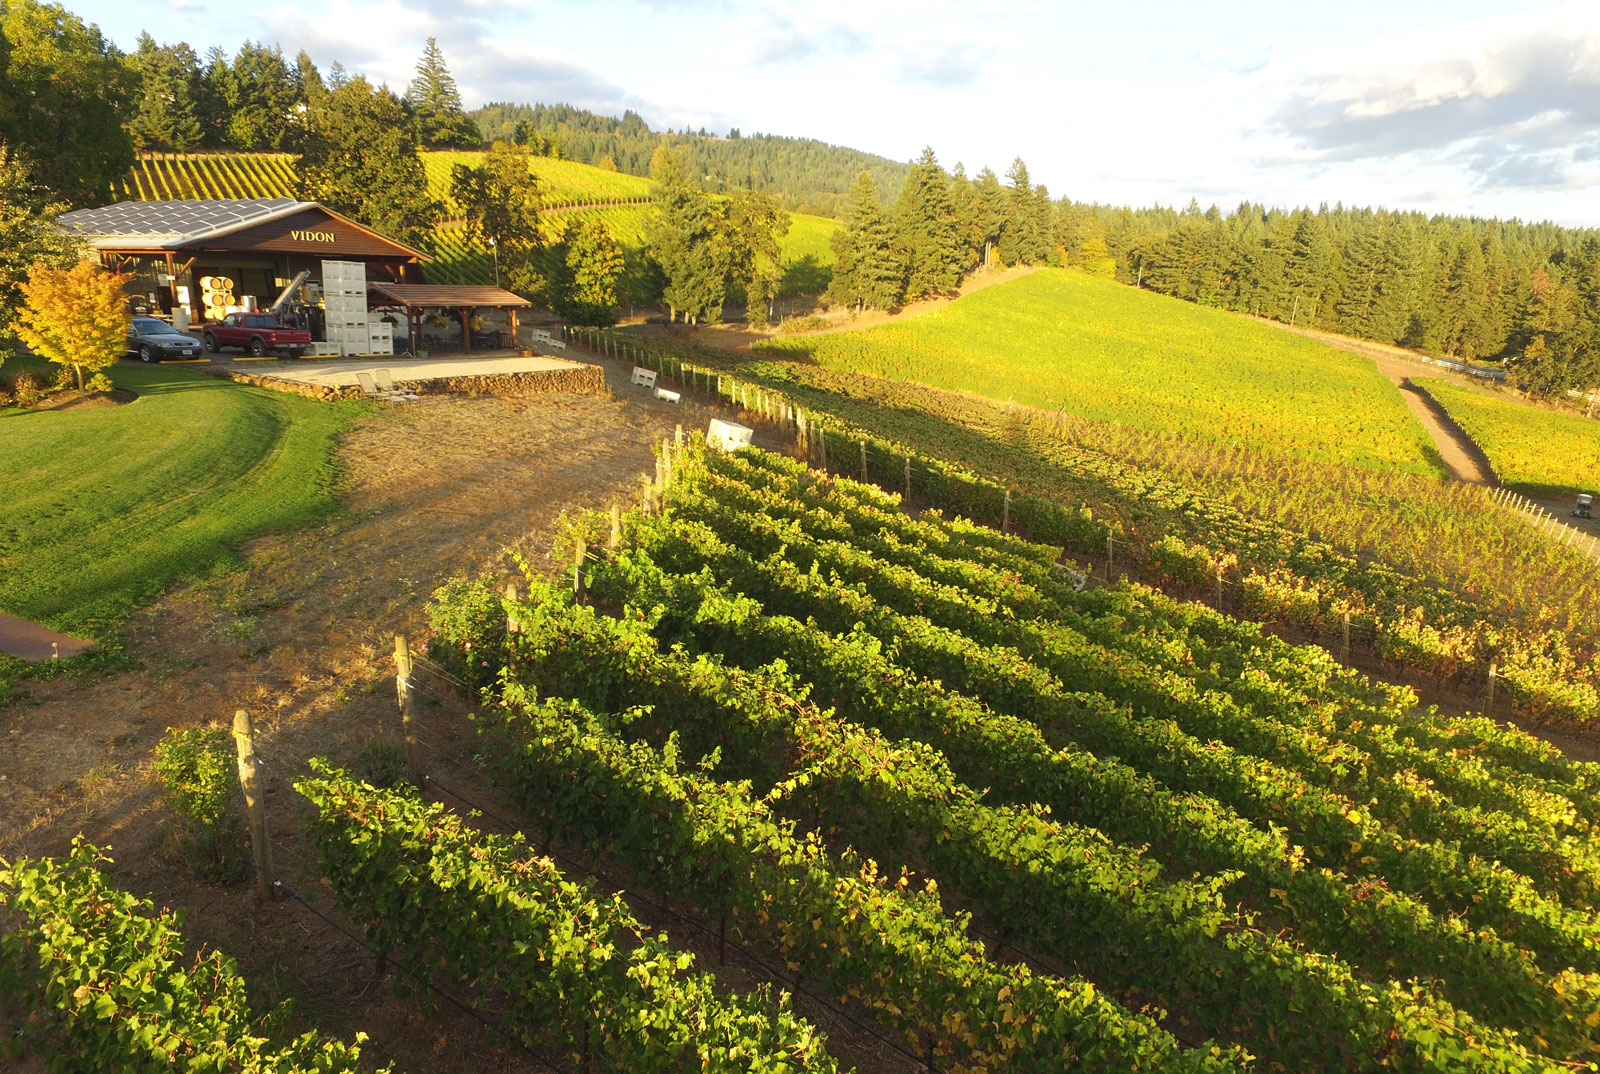 Vidon Vineyard, Newberg, Oregon. The best wineries in Willamette Valley. Willamette Valley wineries.